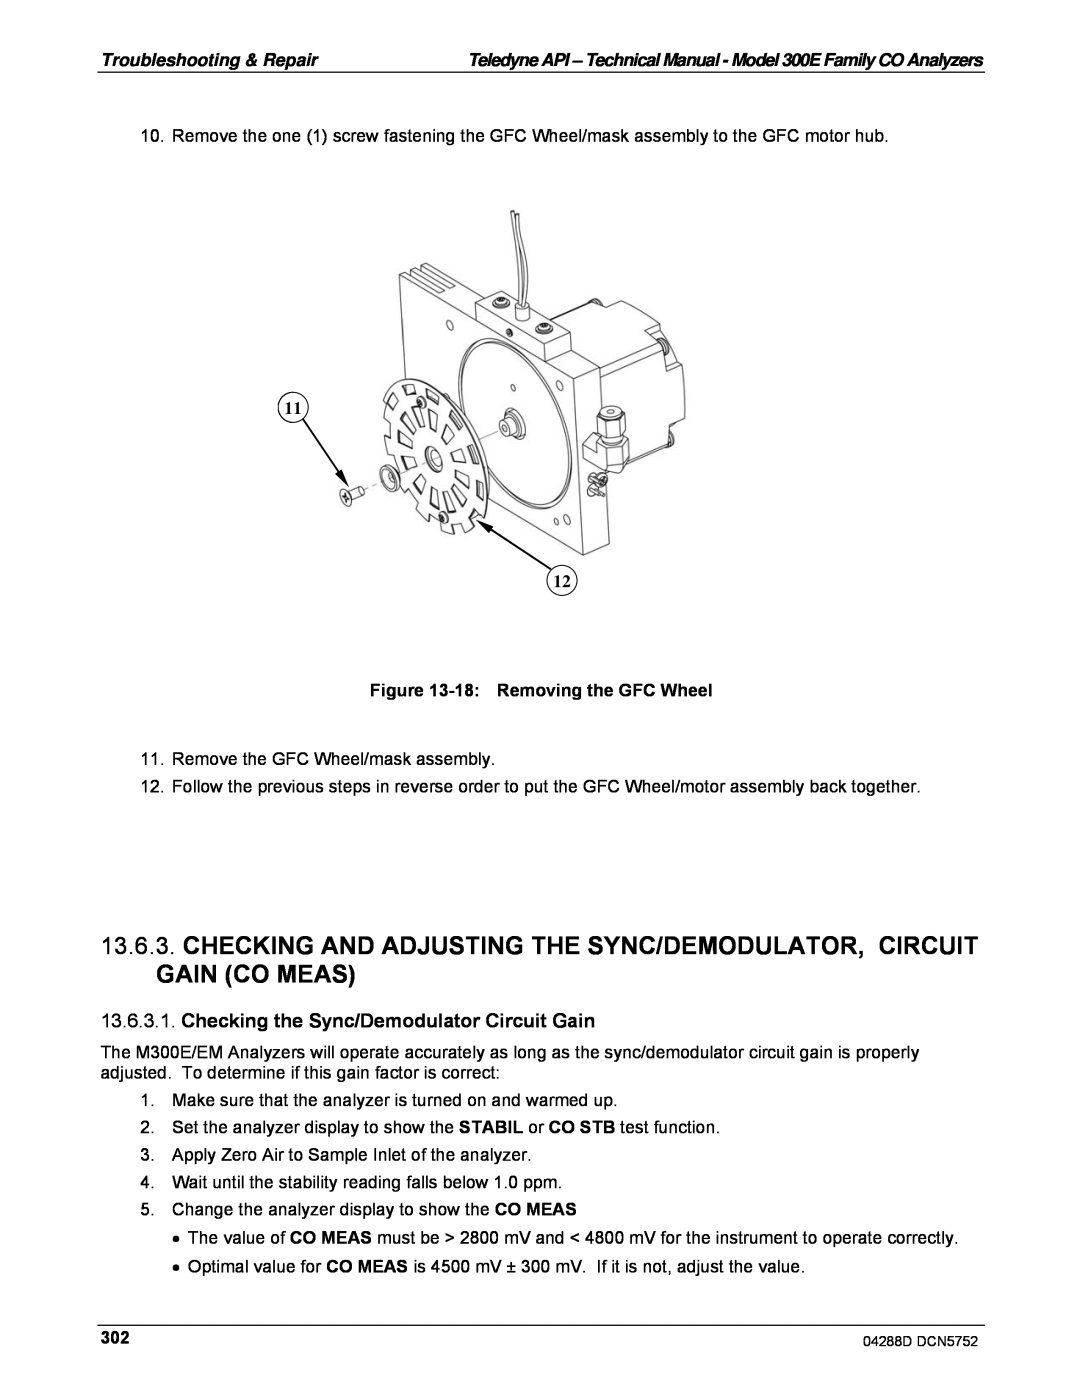 Teledyne M300EM operation manual 18:Removing the GFC Wheel 